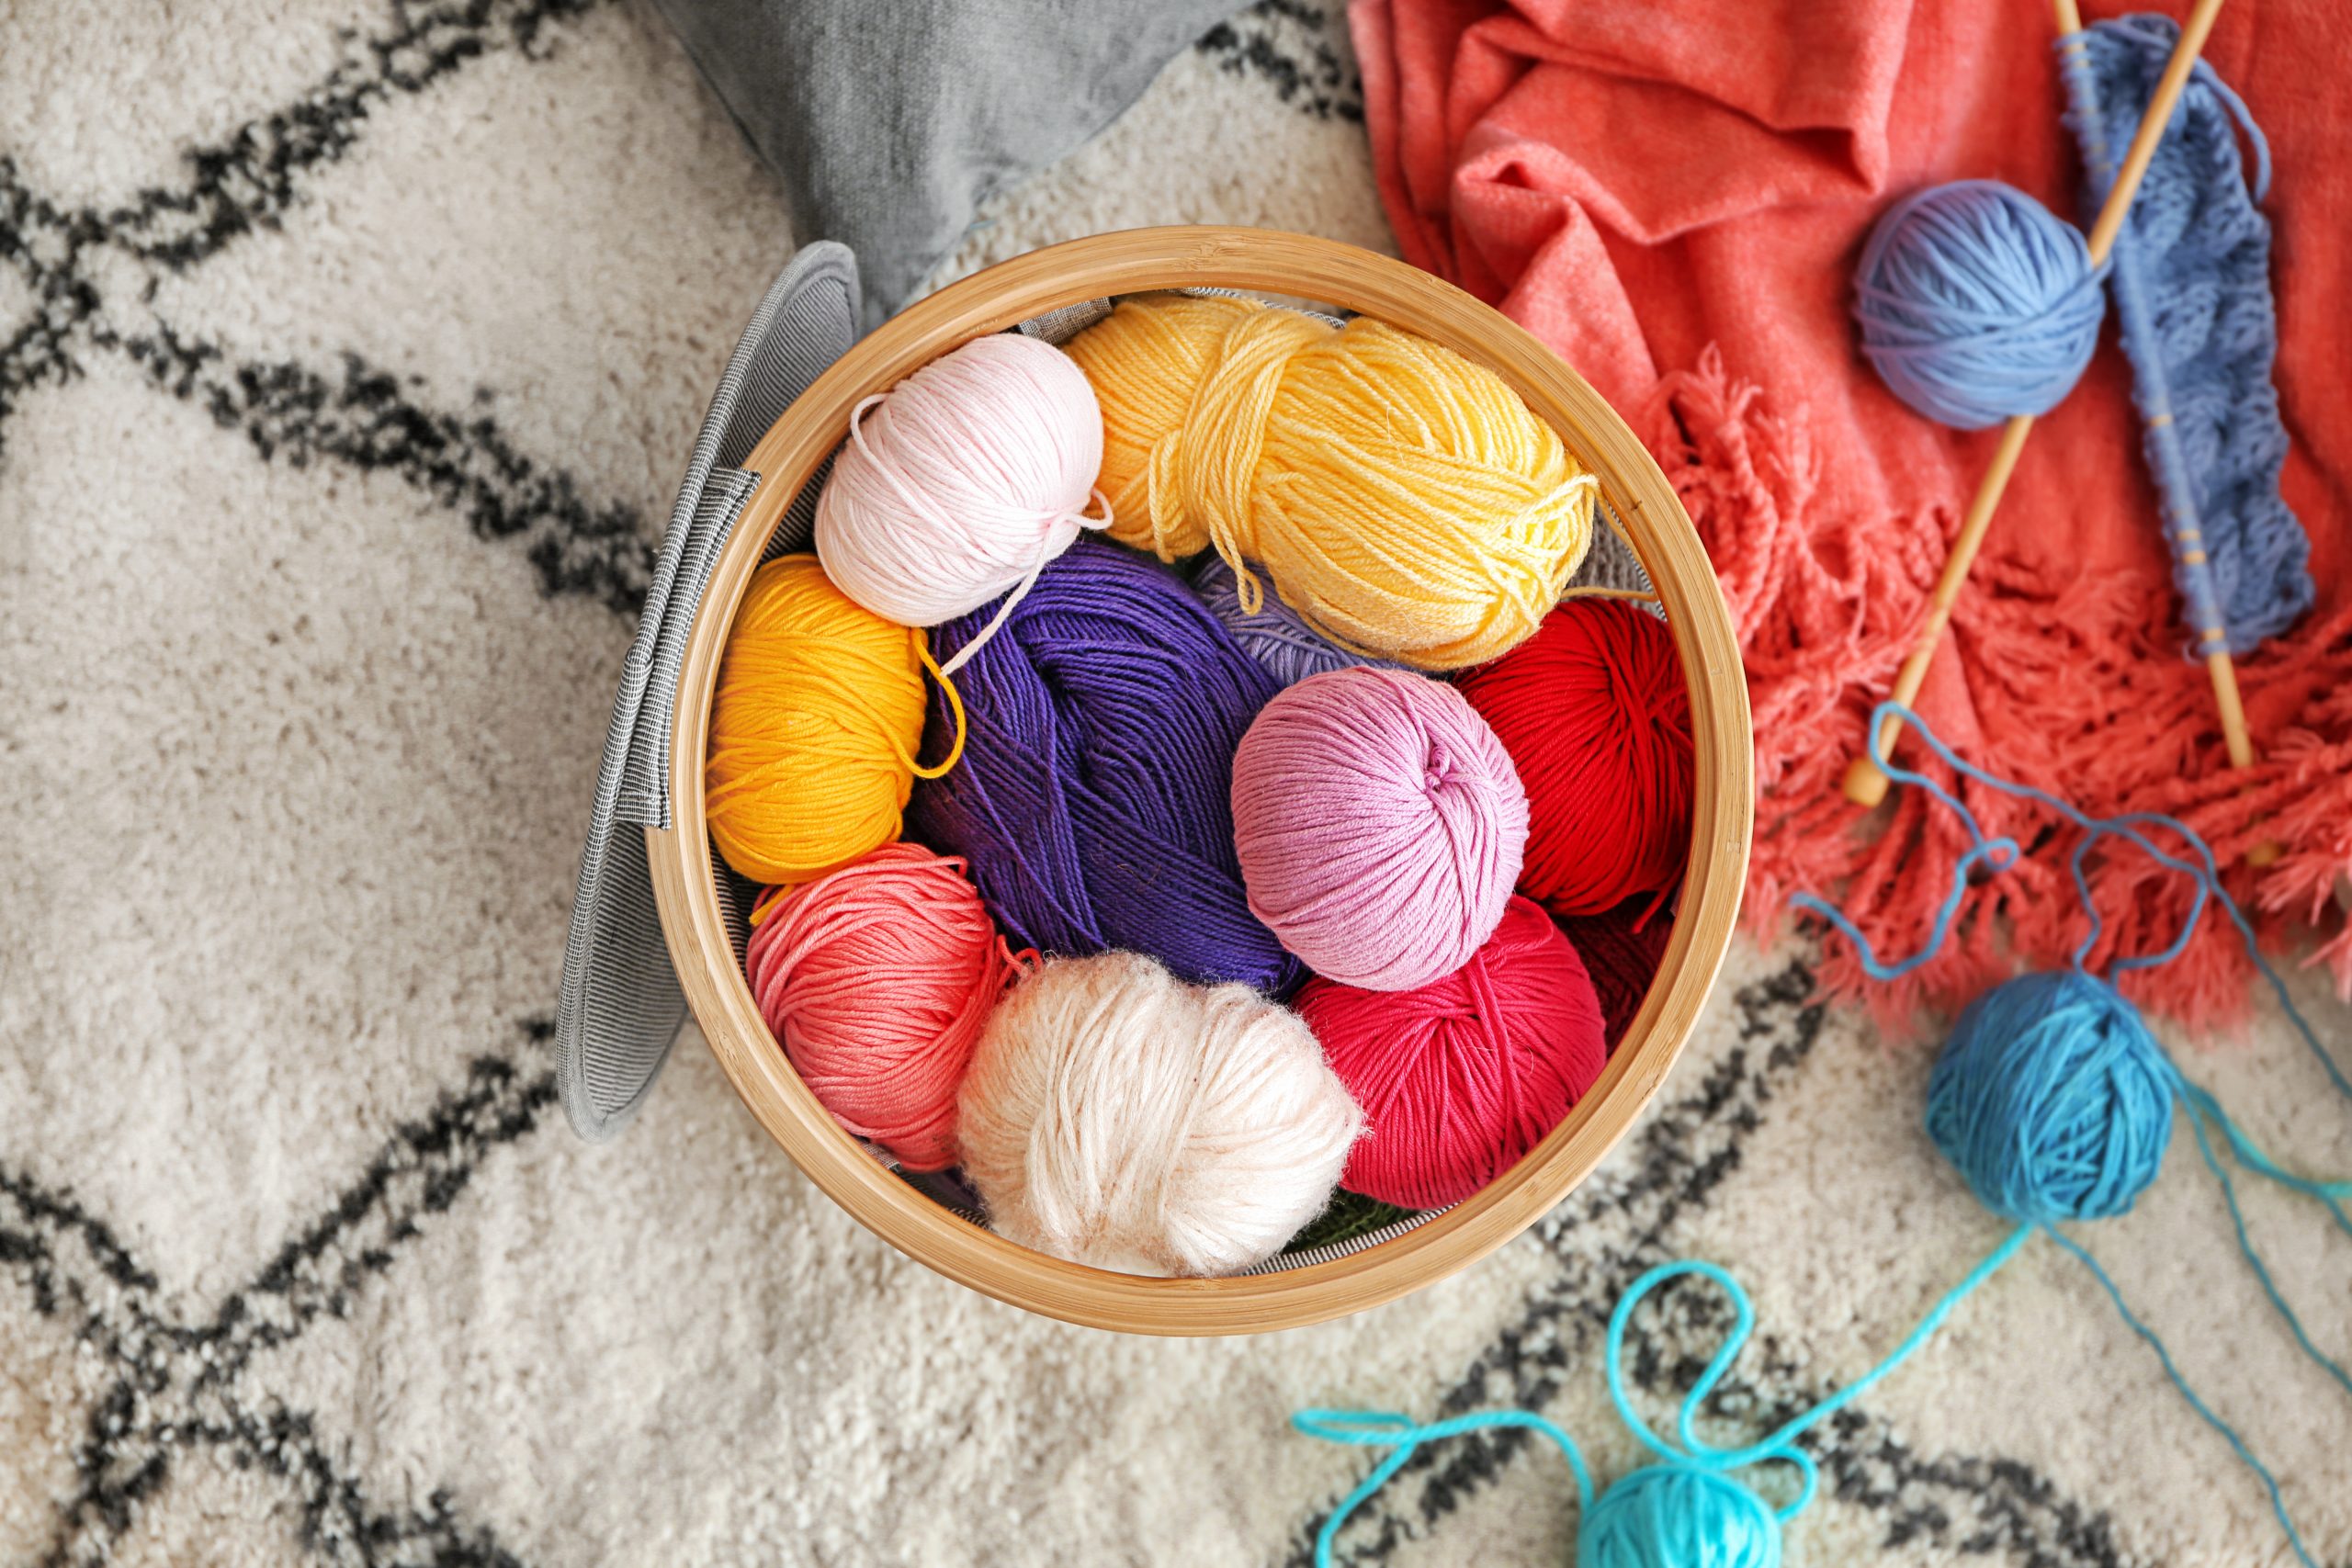  Yarn Storage Bag, Mesh Knitting Bag with Grommet